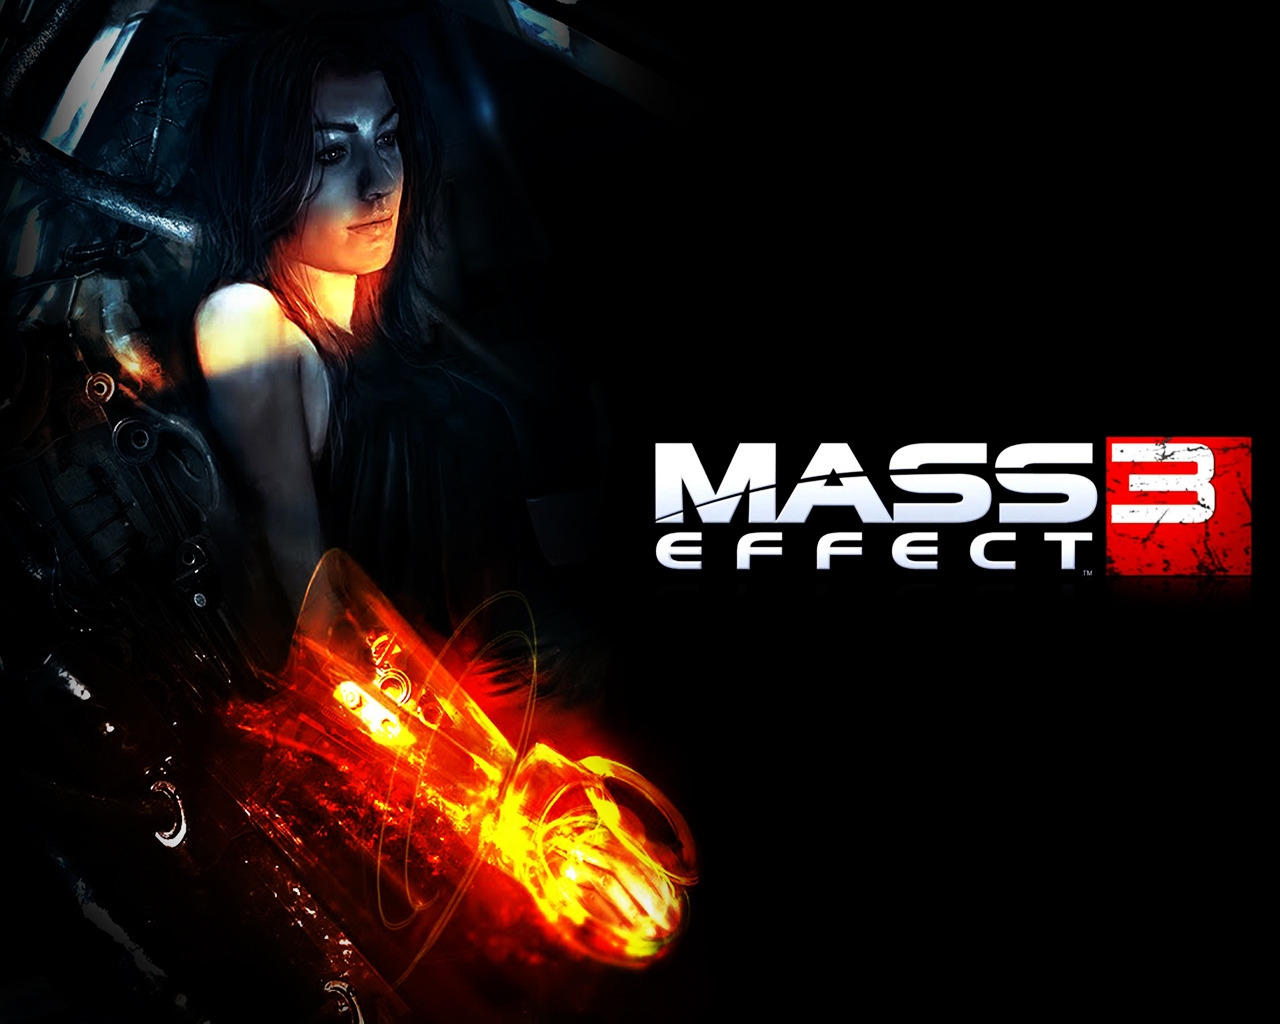 Miranda Mass Effect 3 for 1280 x 1024 resolution